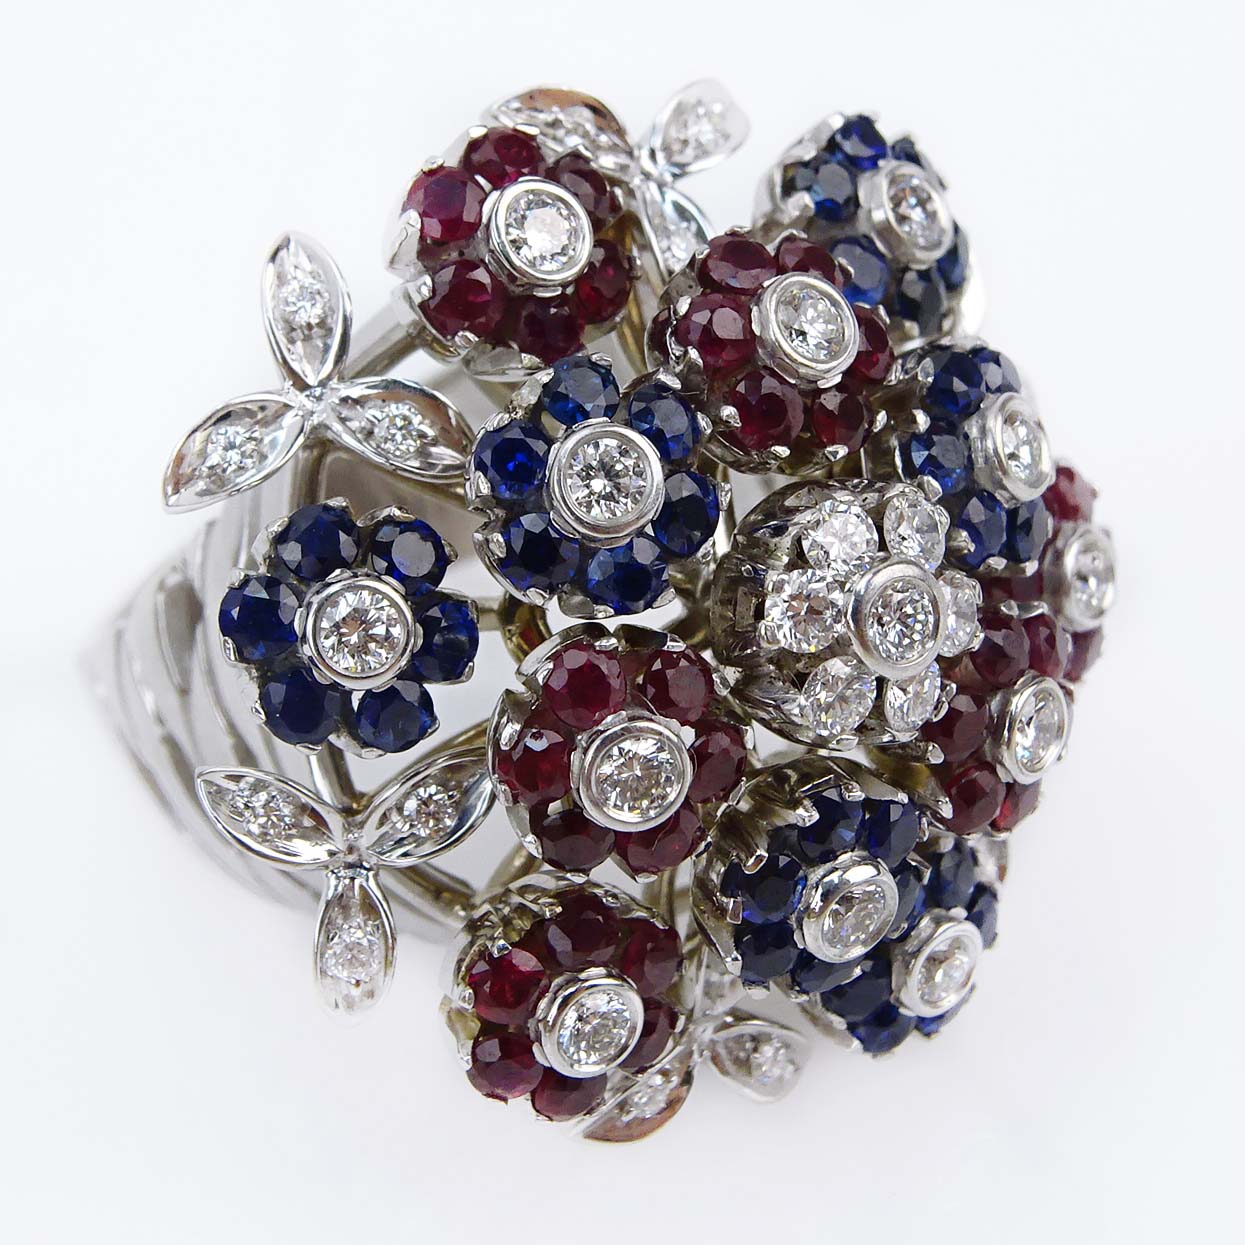 Vintage Cartier Diamond, Ruby, Sapphire and 18 Karat White Gold Ring en tremblant. 